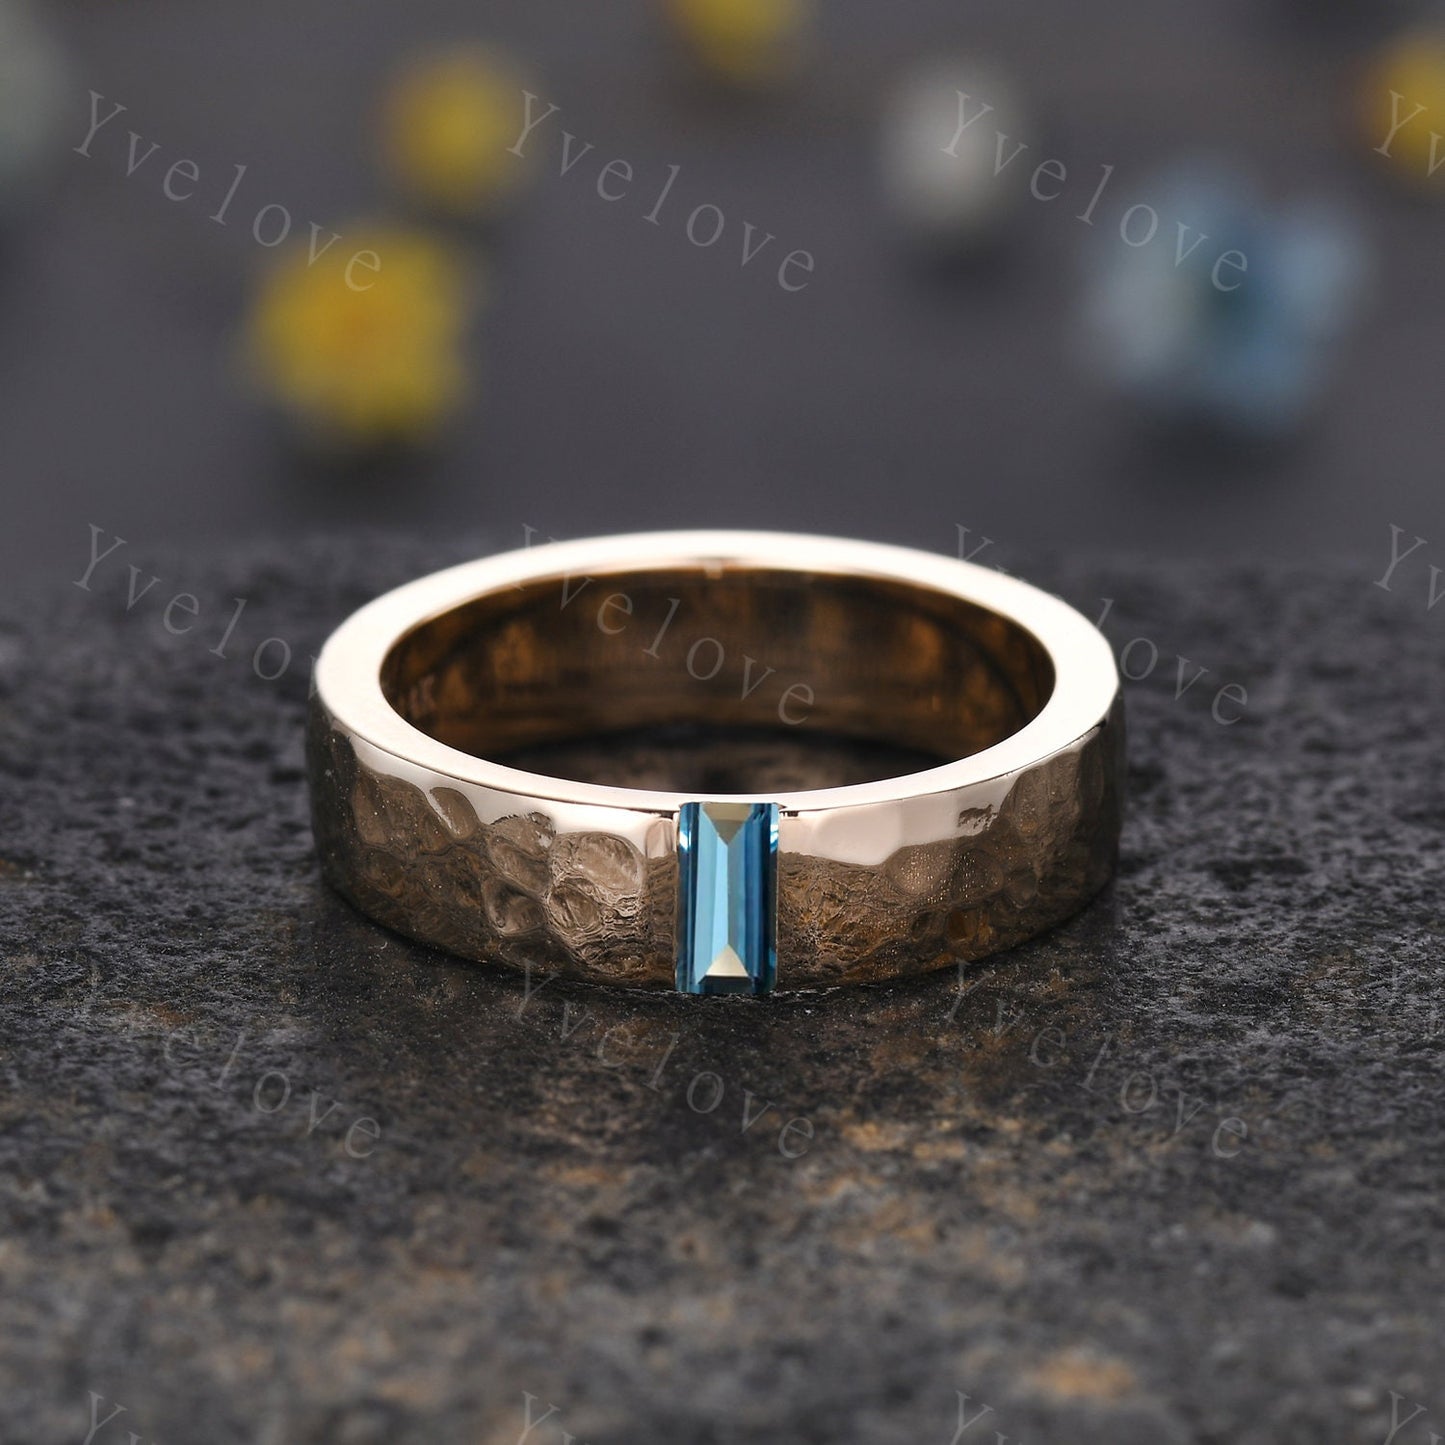 Mens London Blue Topaz Wedding Band Baguette Cut Blue Gem Band 5mm Solid Gold Ring Hammered Stacking Matching Band Retro Vintage Ring Gift